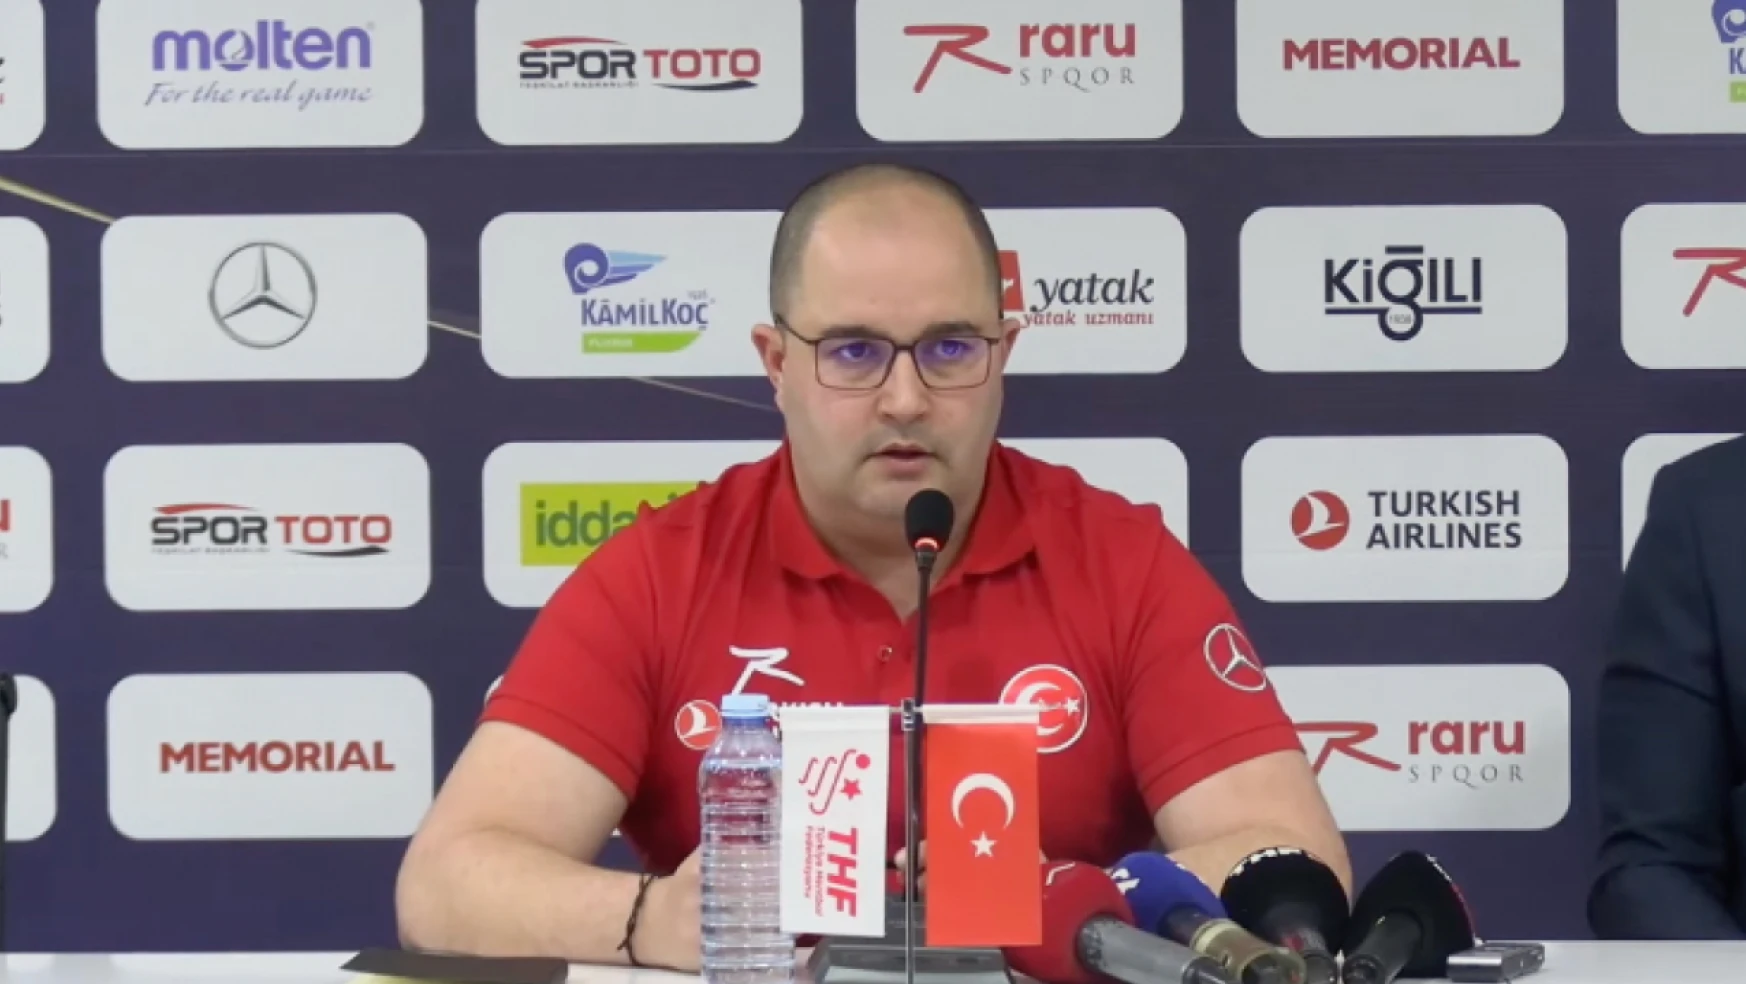 Gordo is The New Head Coach Of The Men's National Handball Team